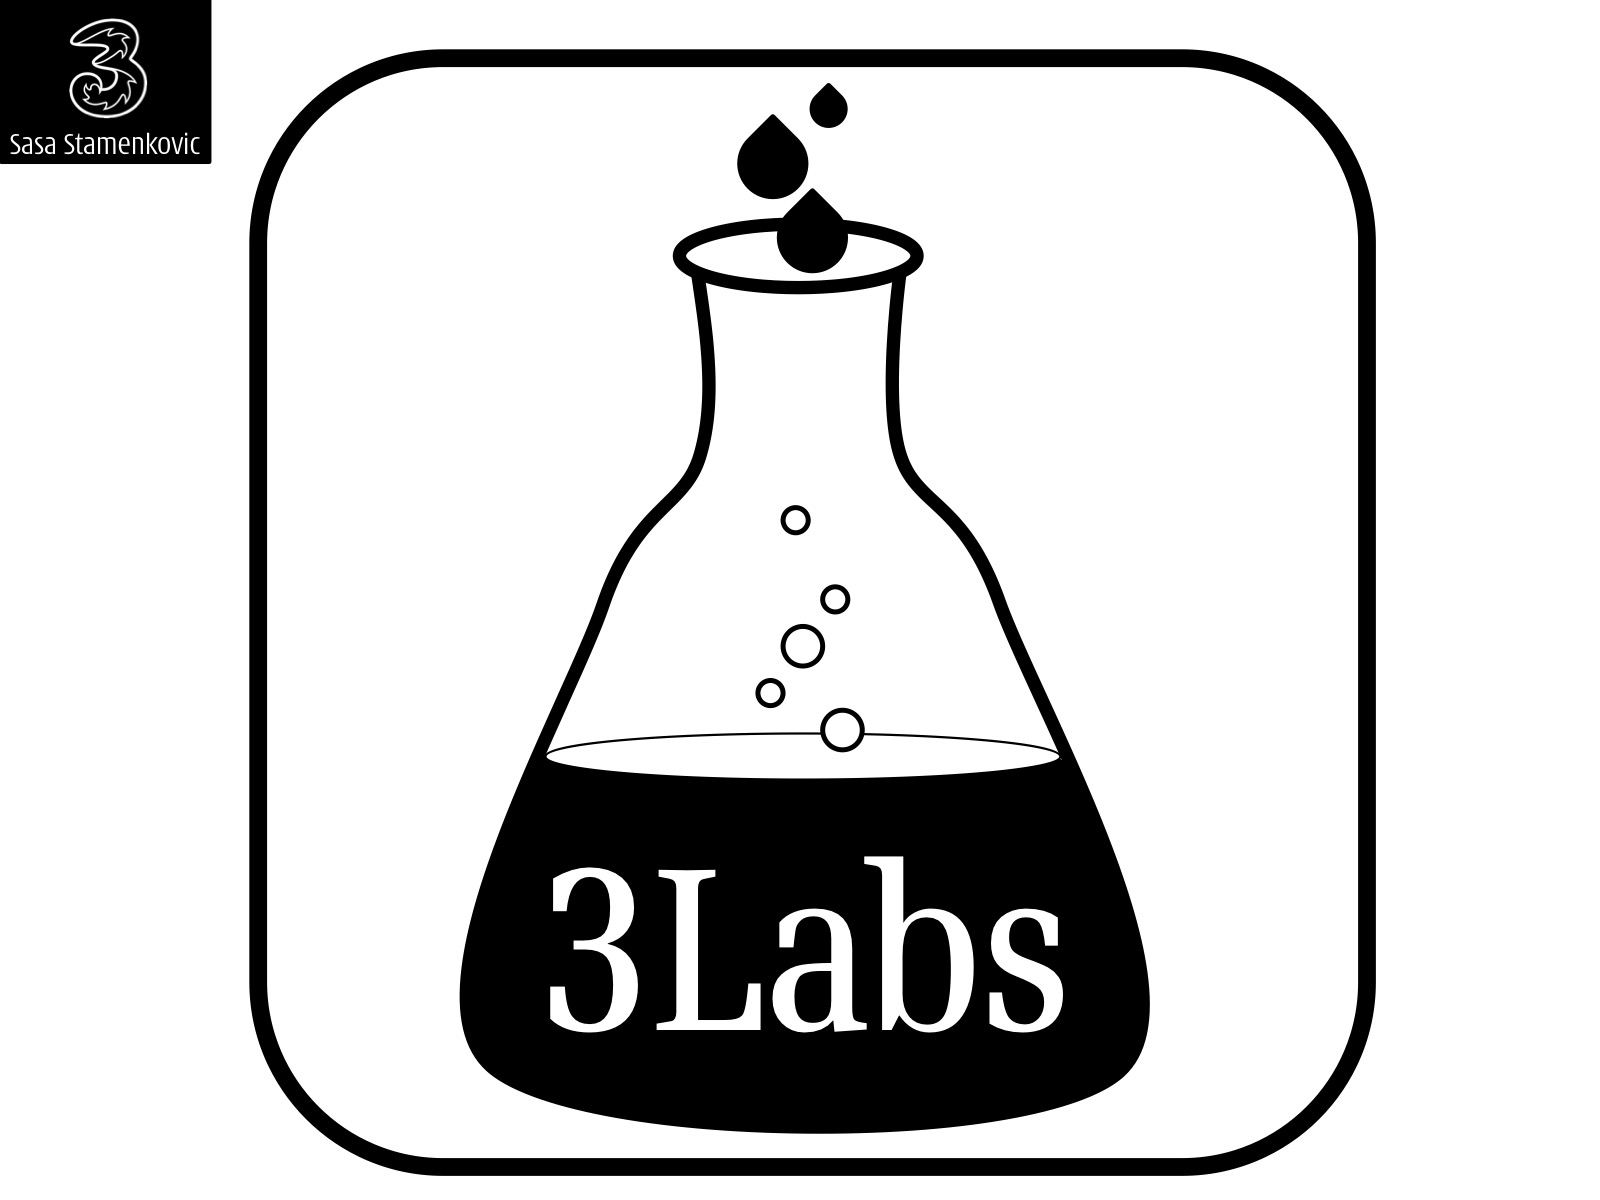 3Labs logo